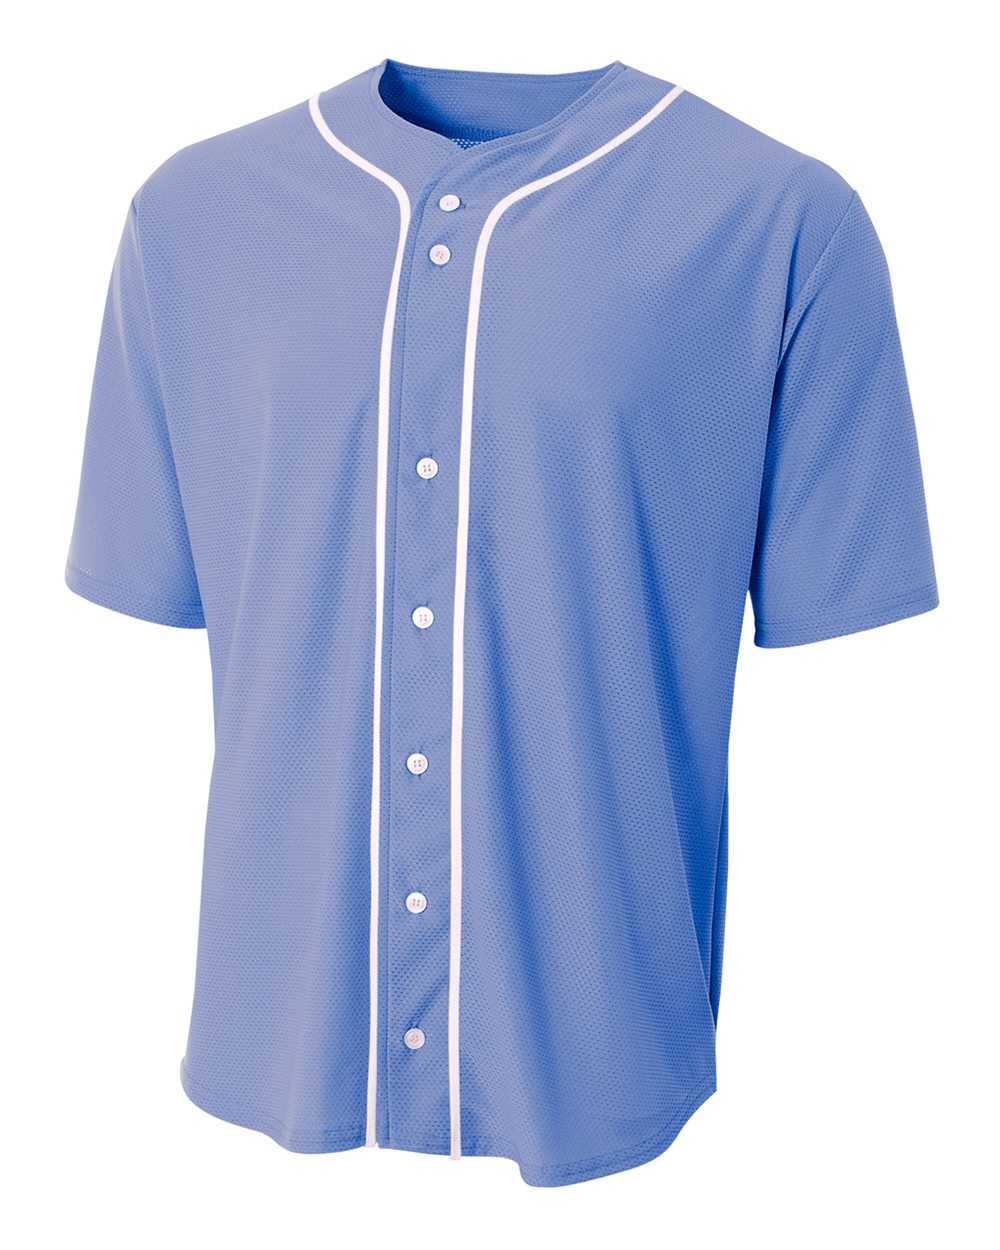 A4 N4184 Short Sleeve Full Button Baseball Top - Light Blue White - HIT a Double